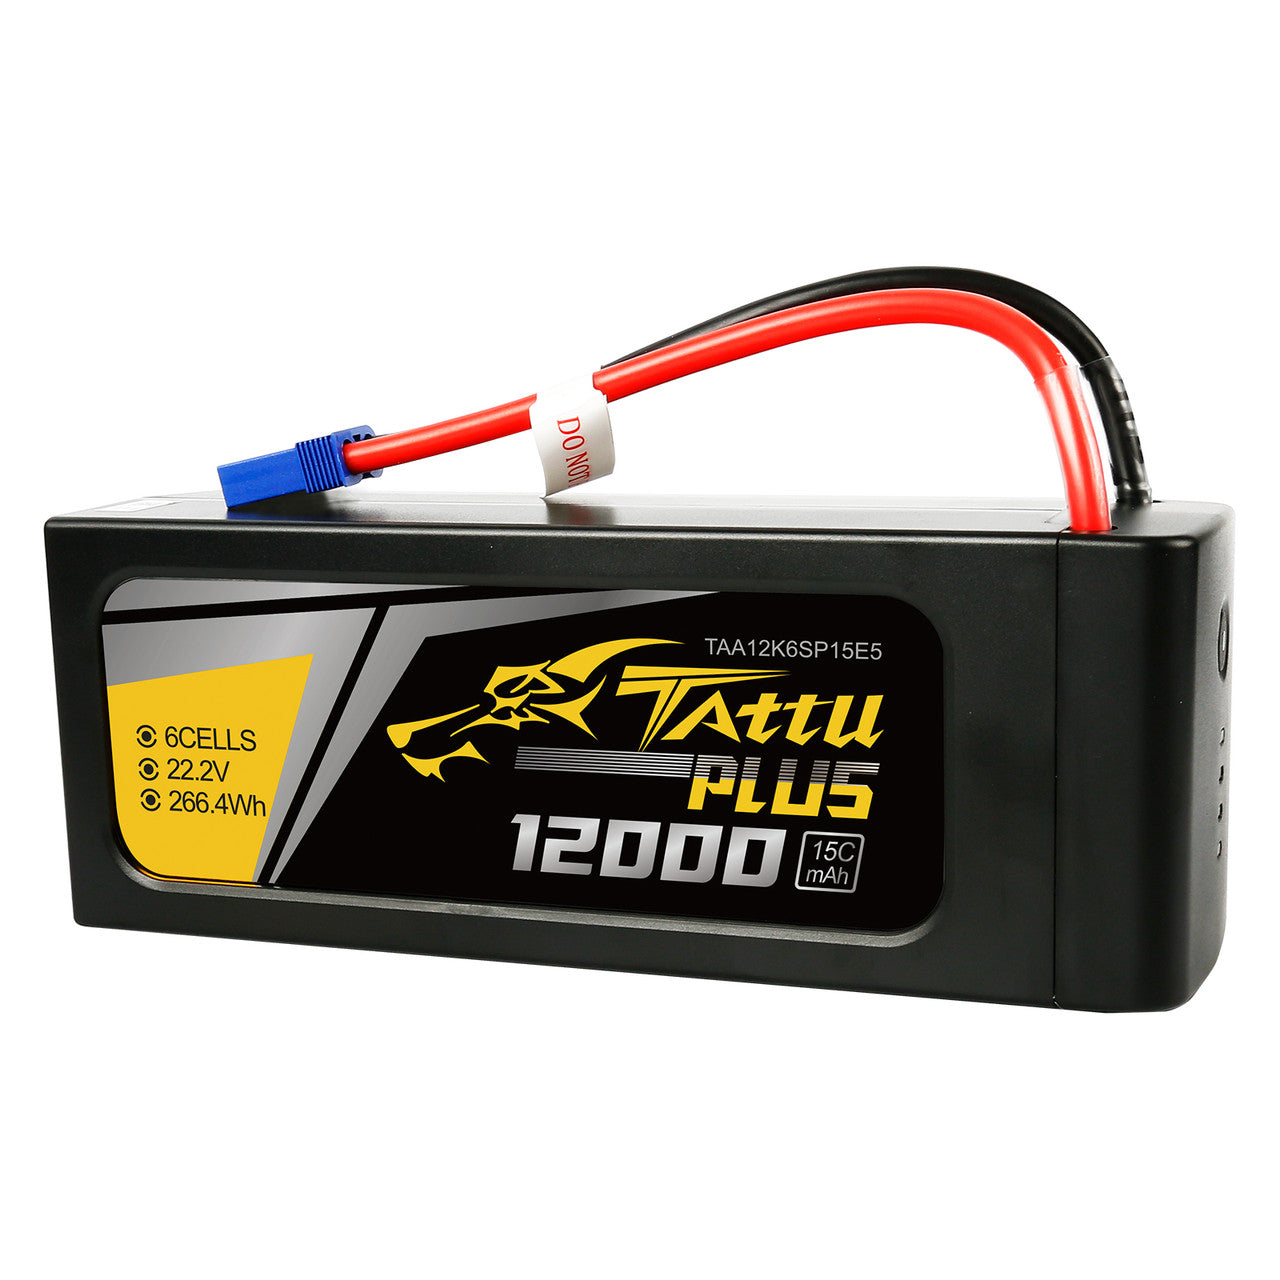 Tattu Plus Smart Lipo Battery Pack - High-performance power and capacity.